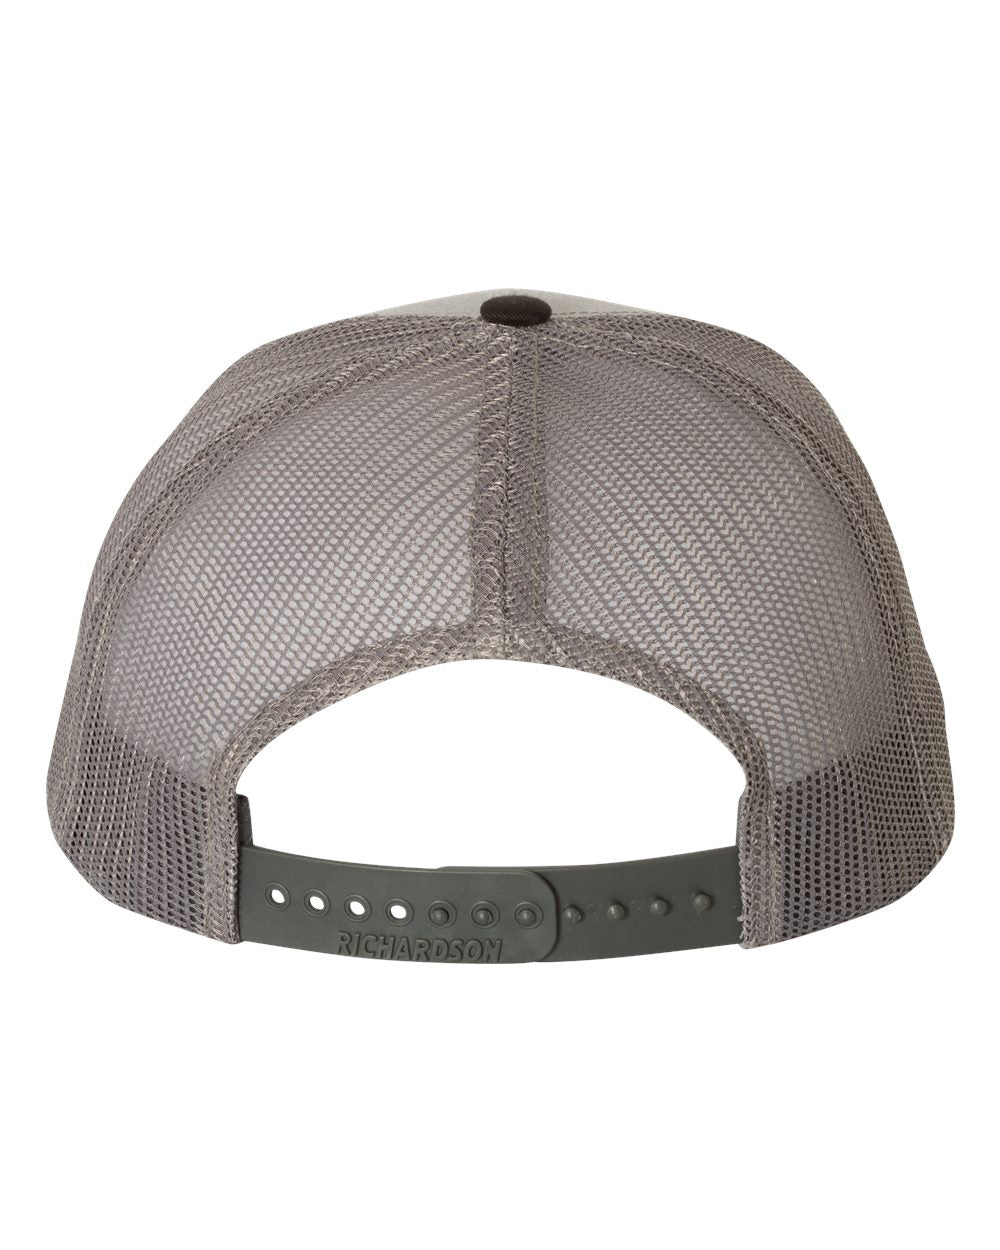 Richardson Adjustable Branded Snapback Trucker Caps, Grey Charcoal Black